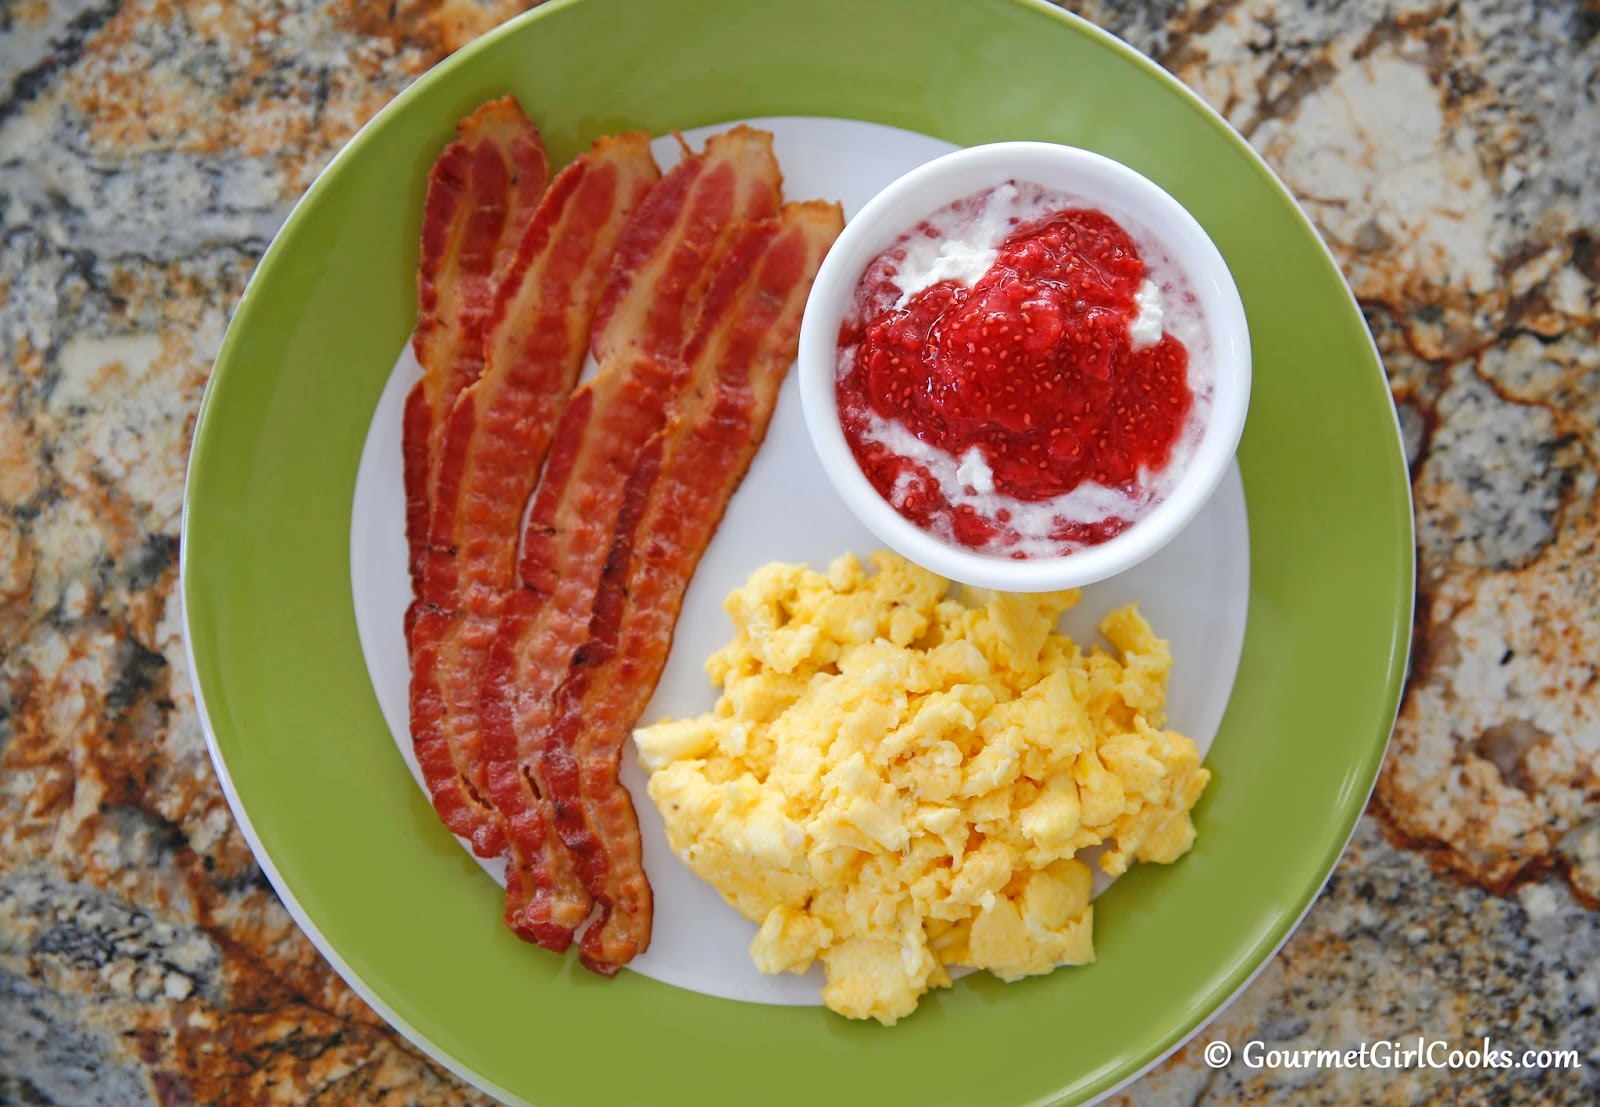 Saturday breakfast – bacon and eggs!